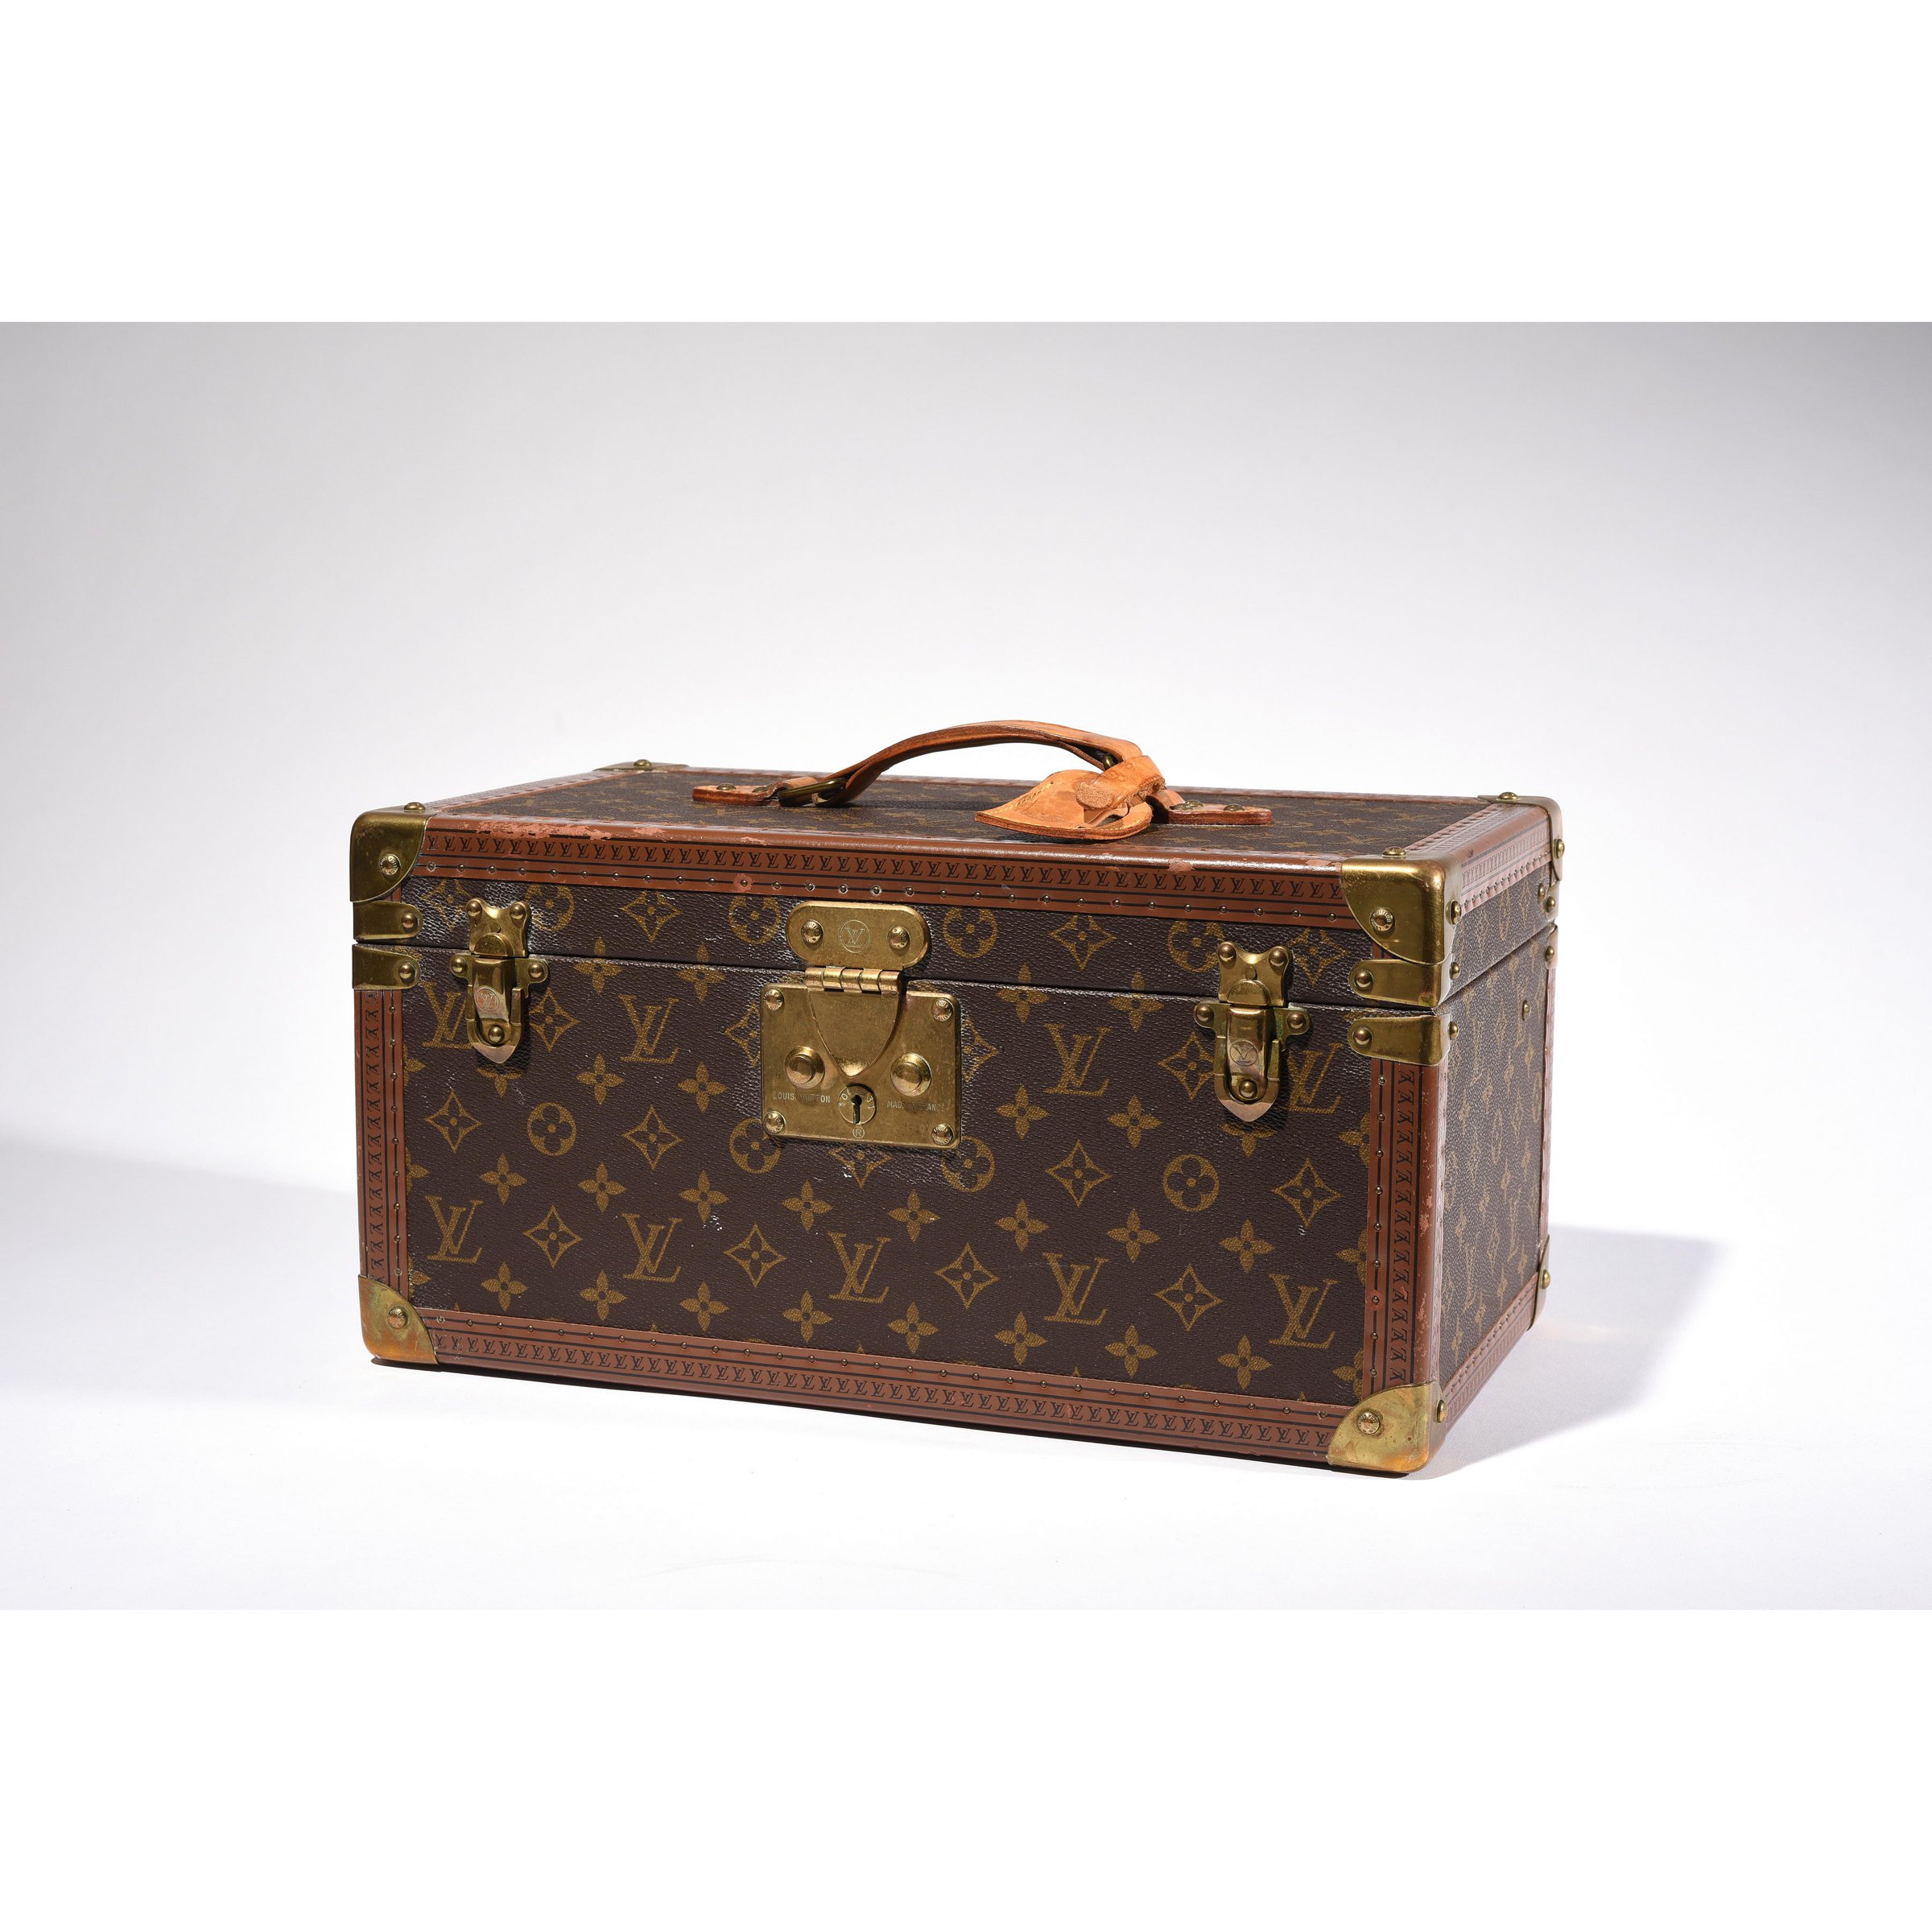 Vintage Louis Vuitton Monogram Vanity Cosmetic Bag sold at auction